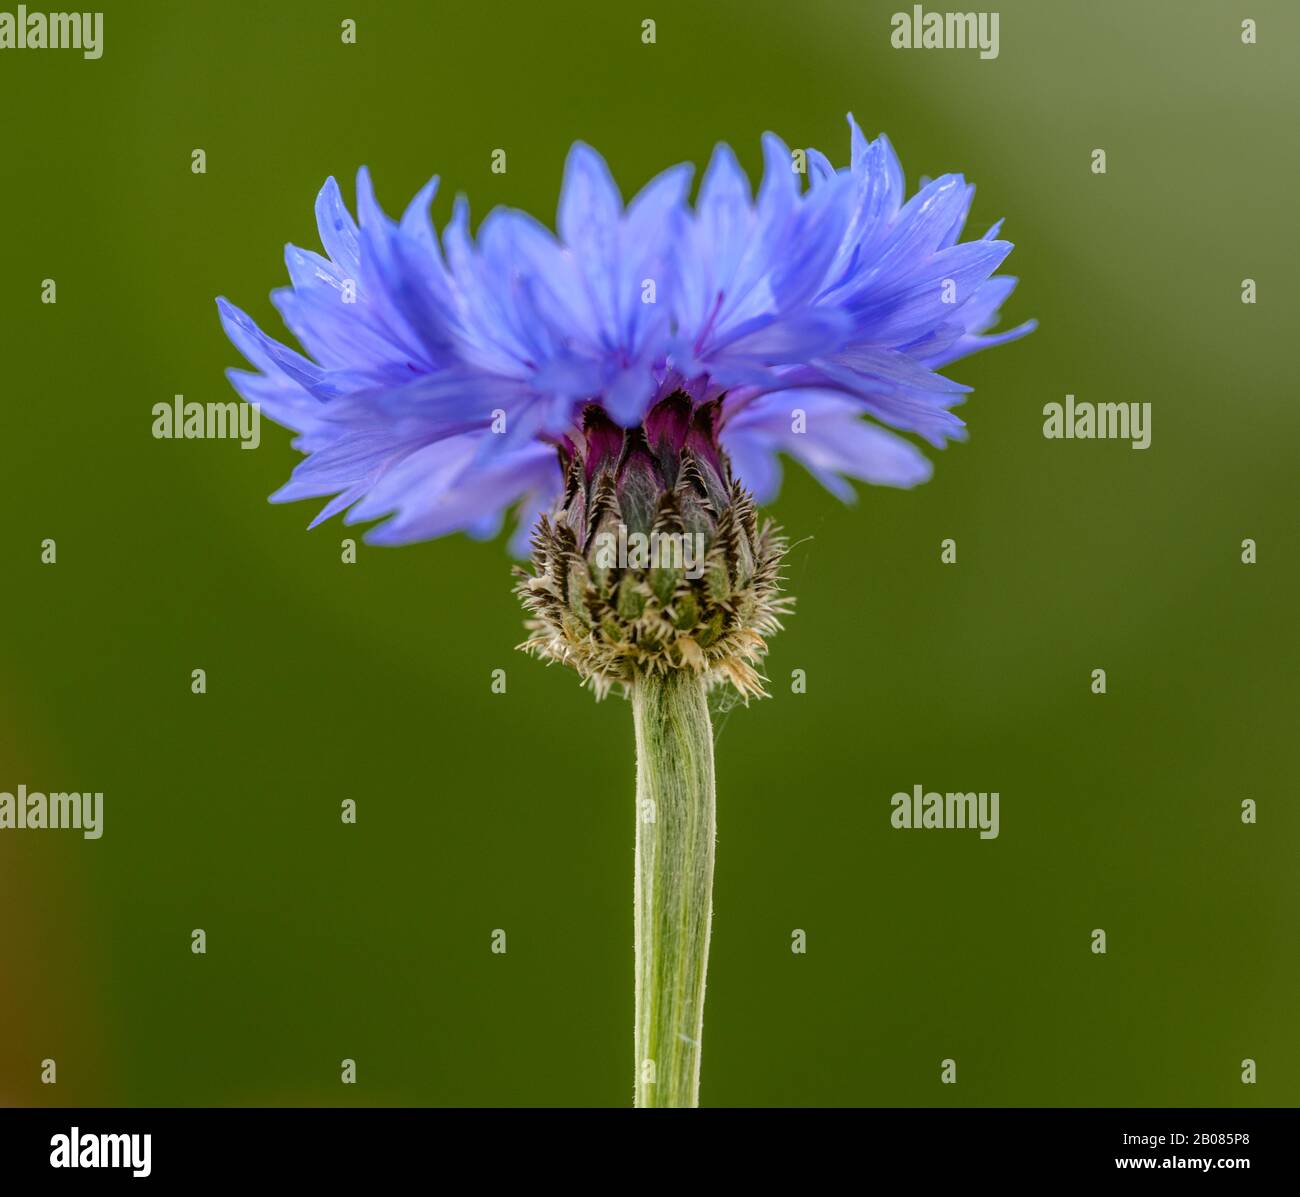 single blue cornflower or bachelor's button (centaurea cyanus) flower on green background, detail Stock Photo